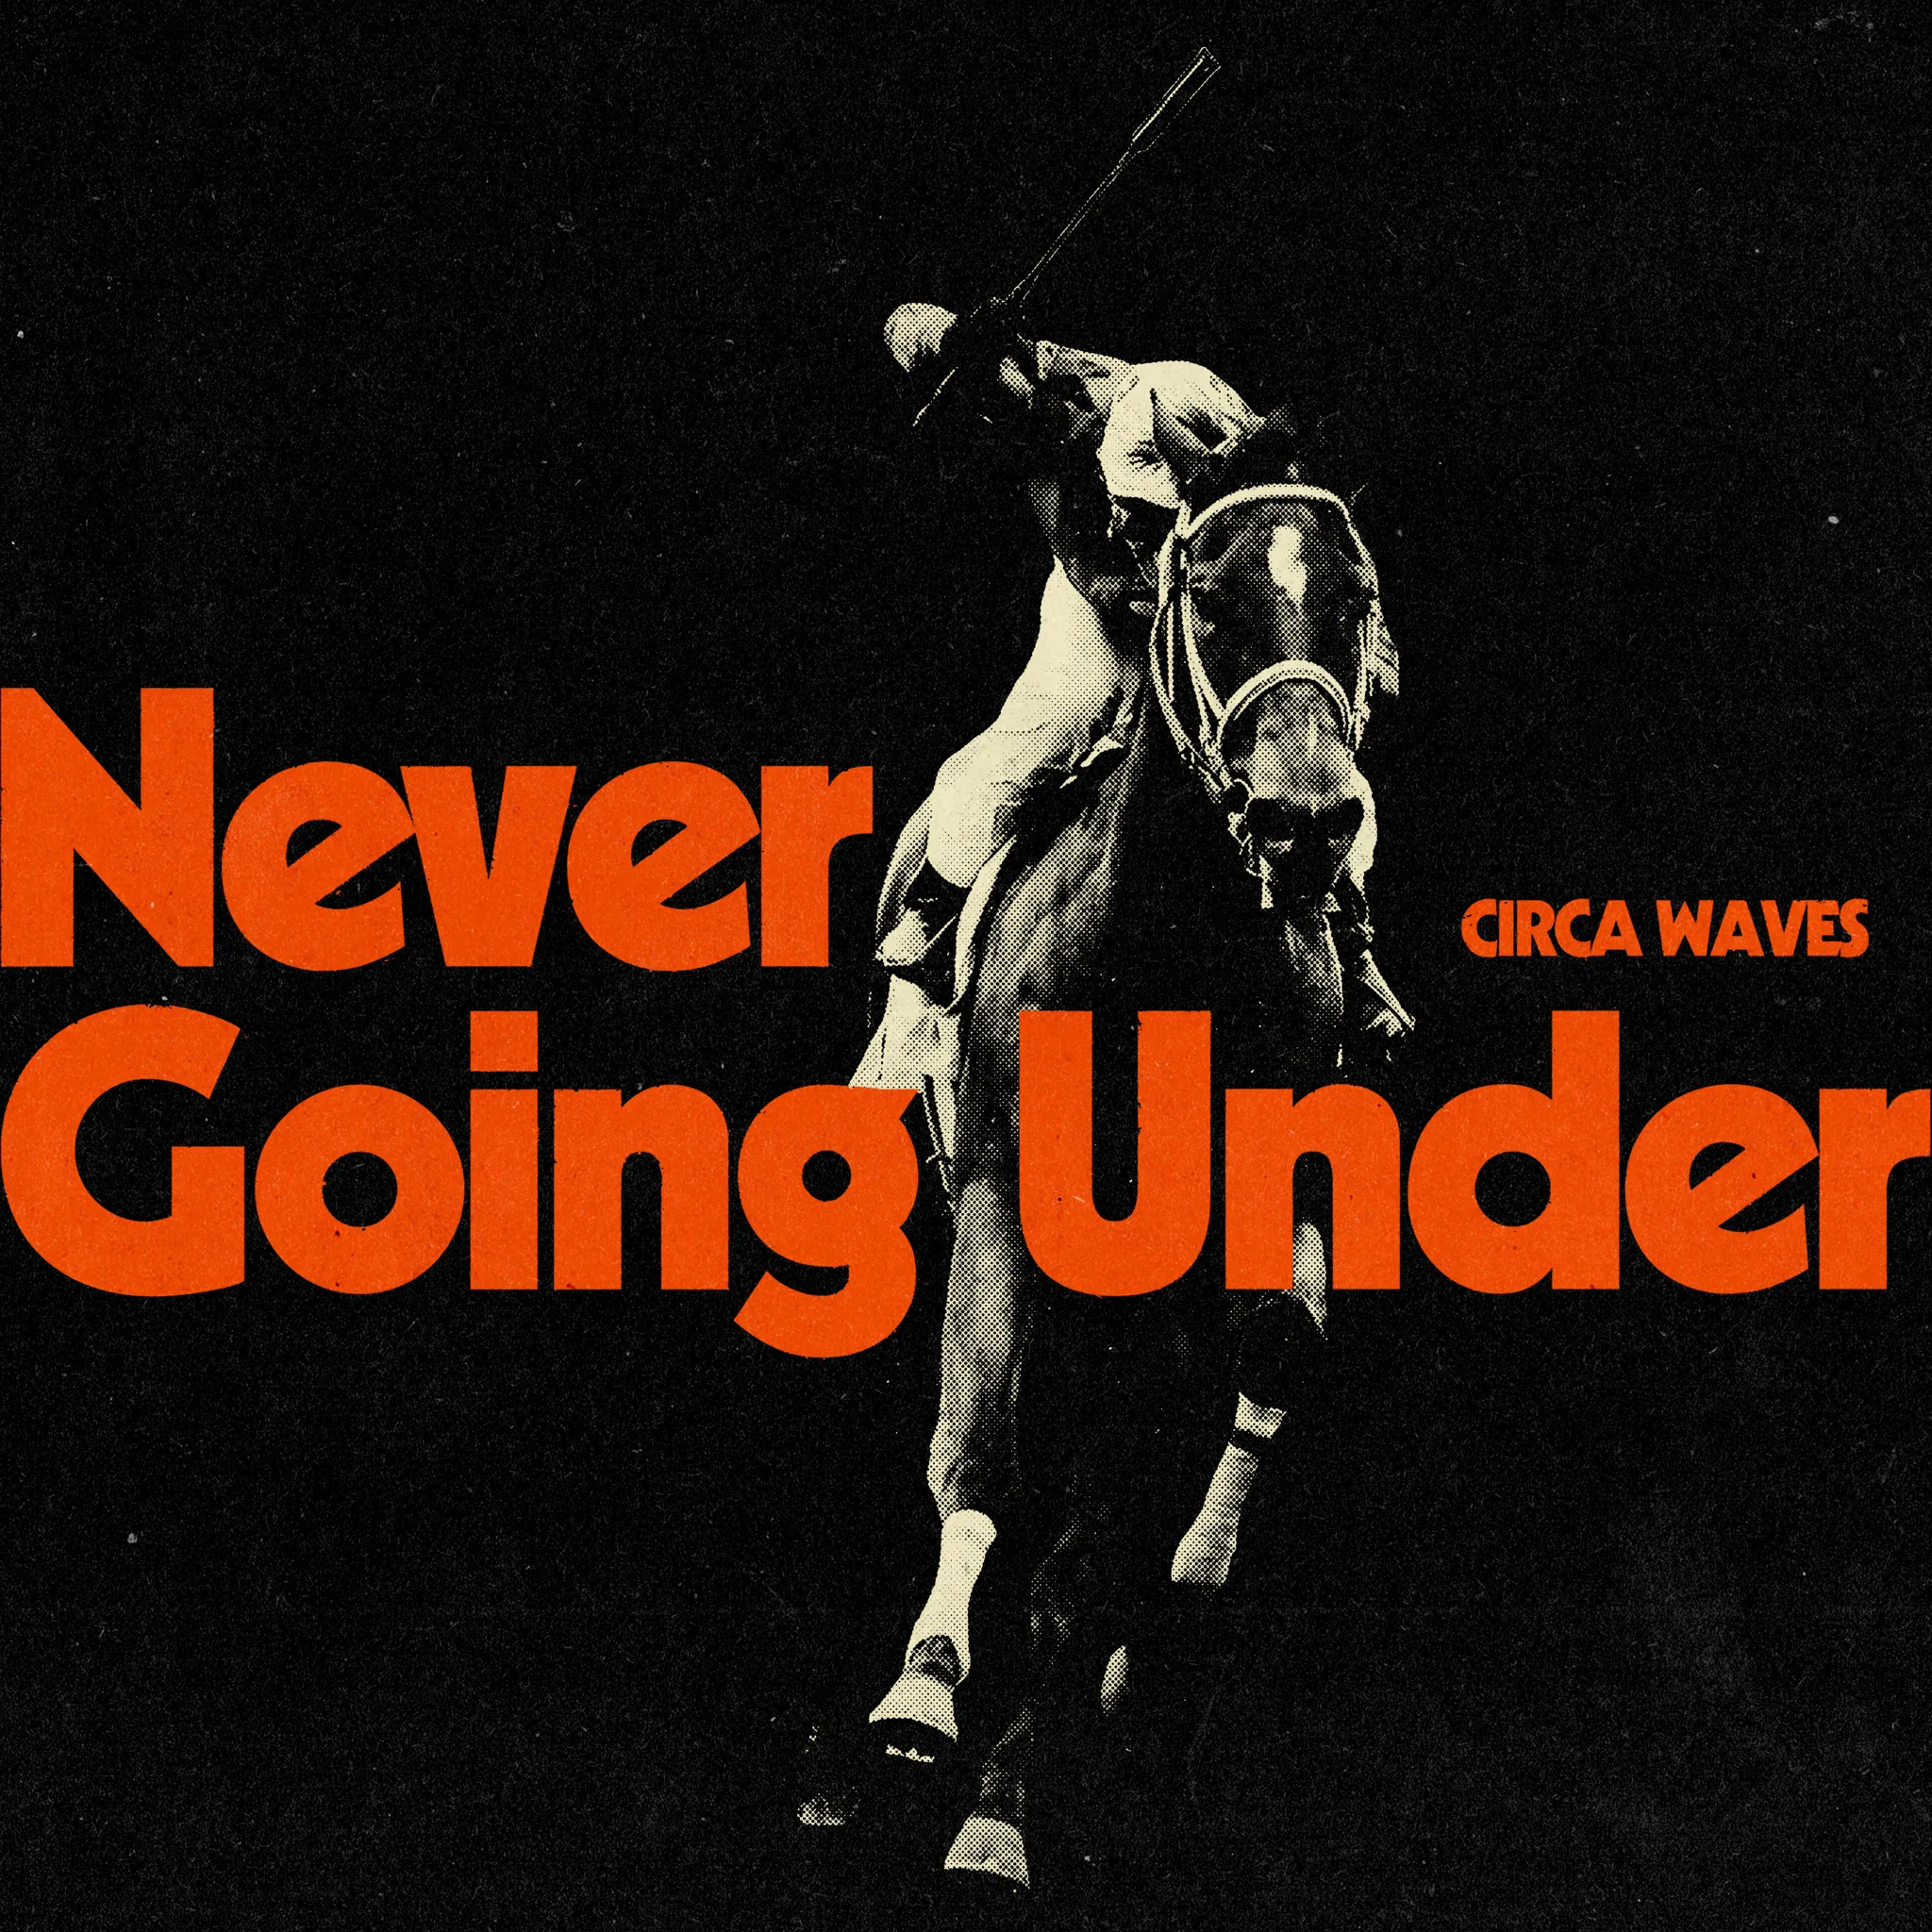 Circa Waves - Never Going Under artwork